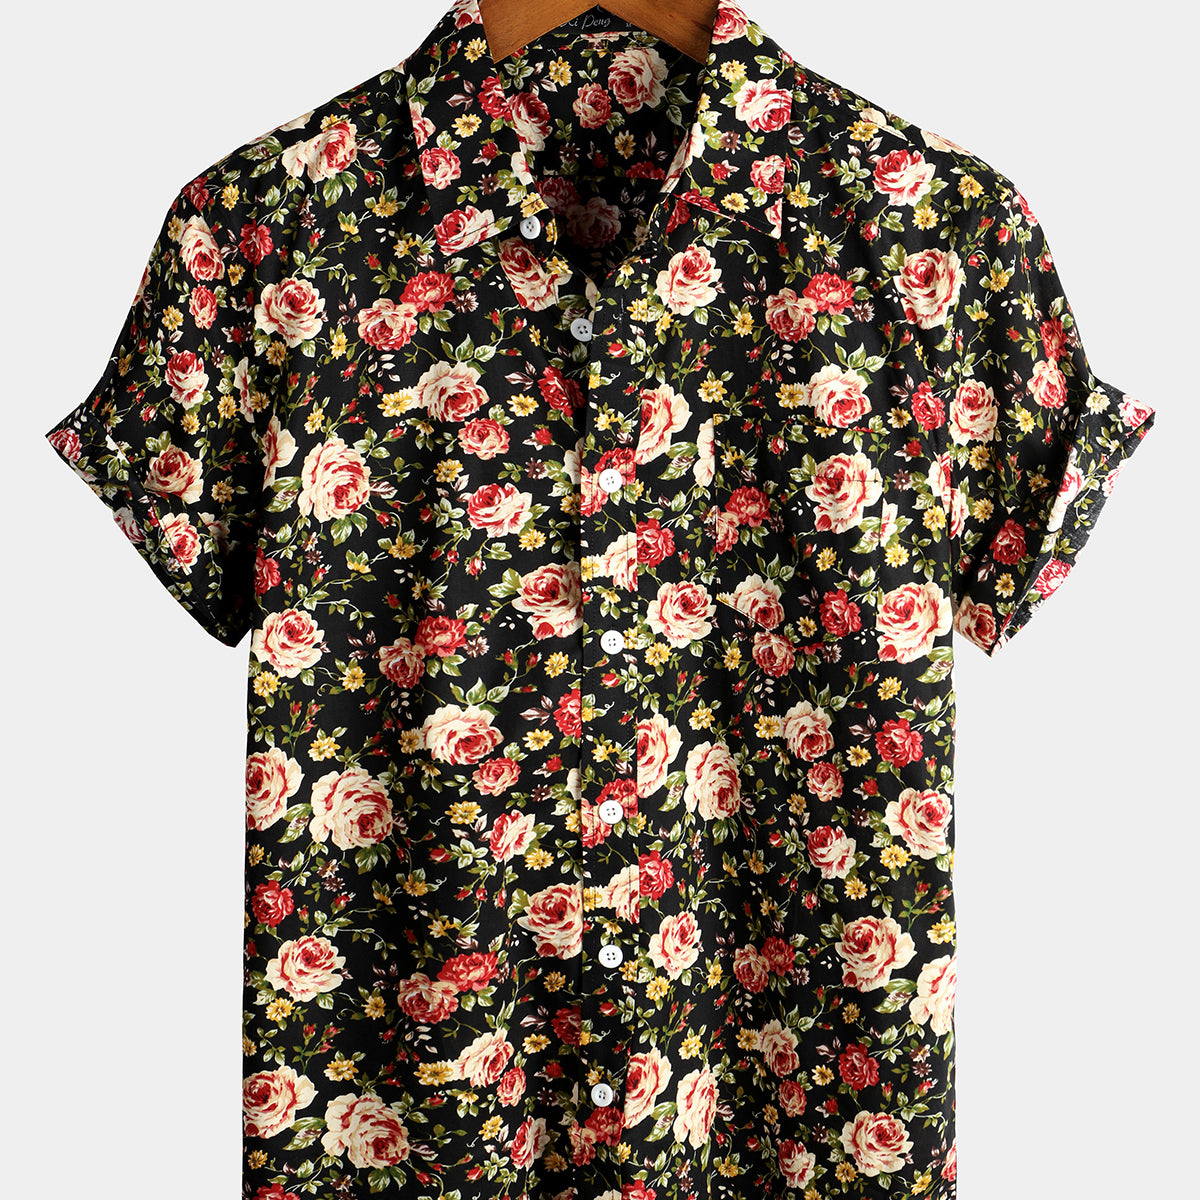 Men's Black Short Sleeve Rose Cotton Shirt